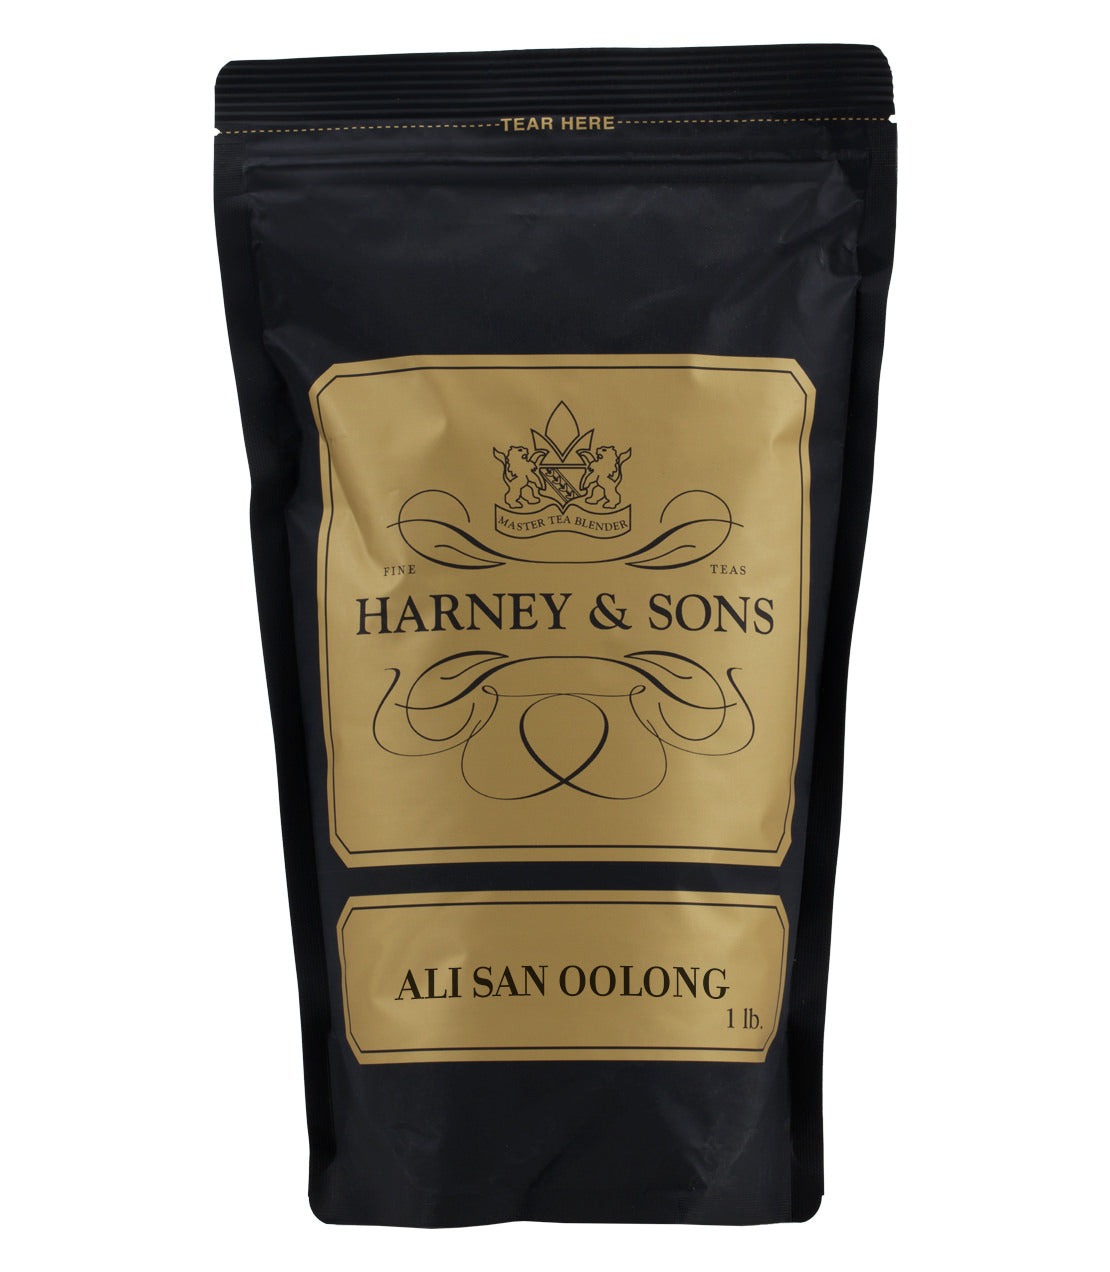 Ali San Oolong - Loose 1 lb. Bag - Harney & Sons Fine Teas